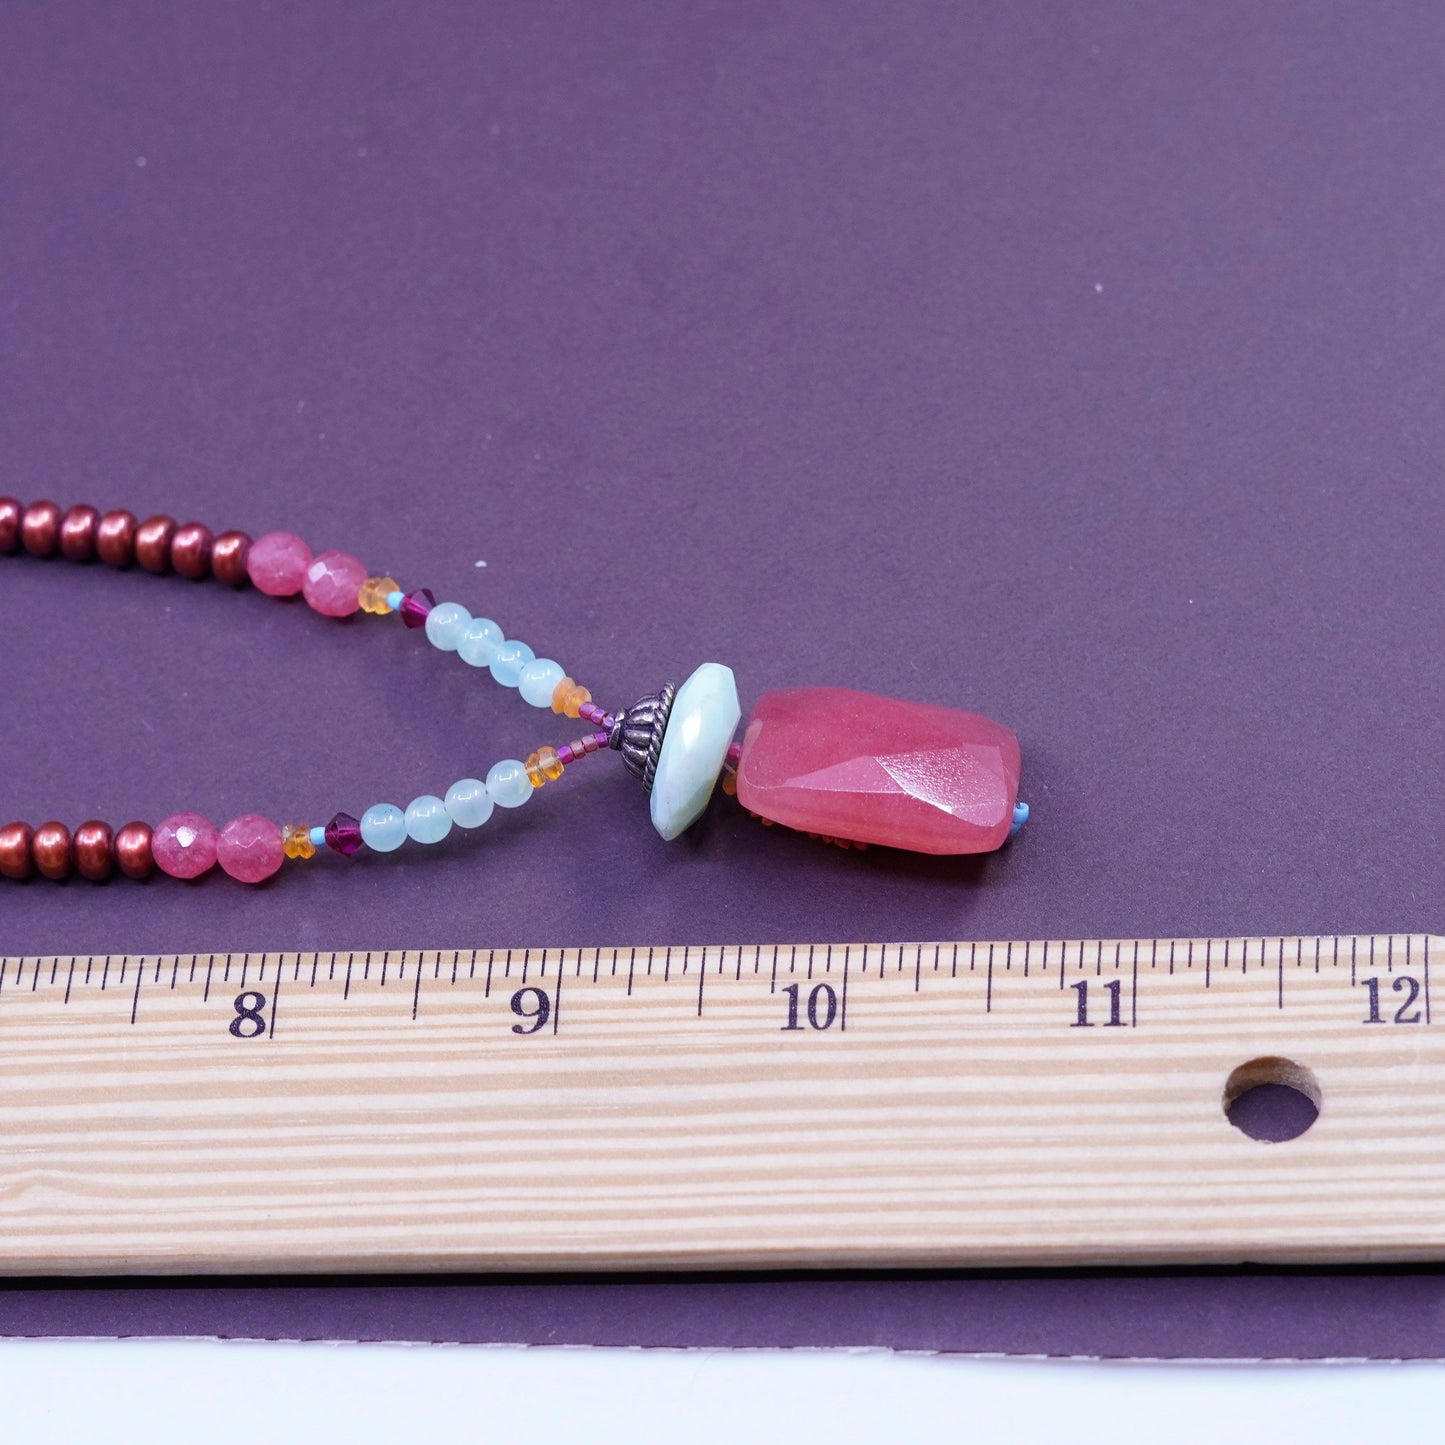 16+1.5” Vintage Sterling silver Handmade necklace w/ pearl rose quartz pendant